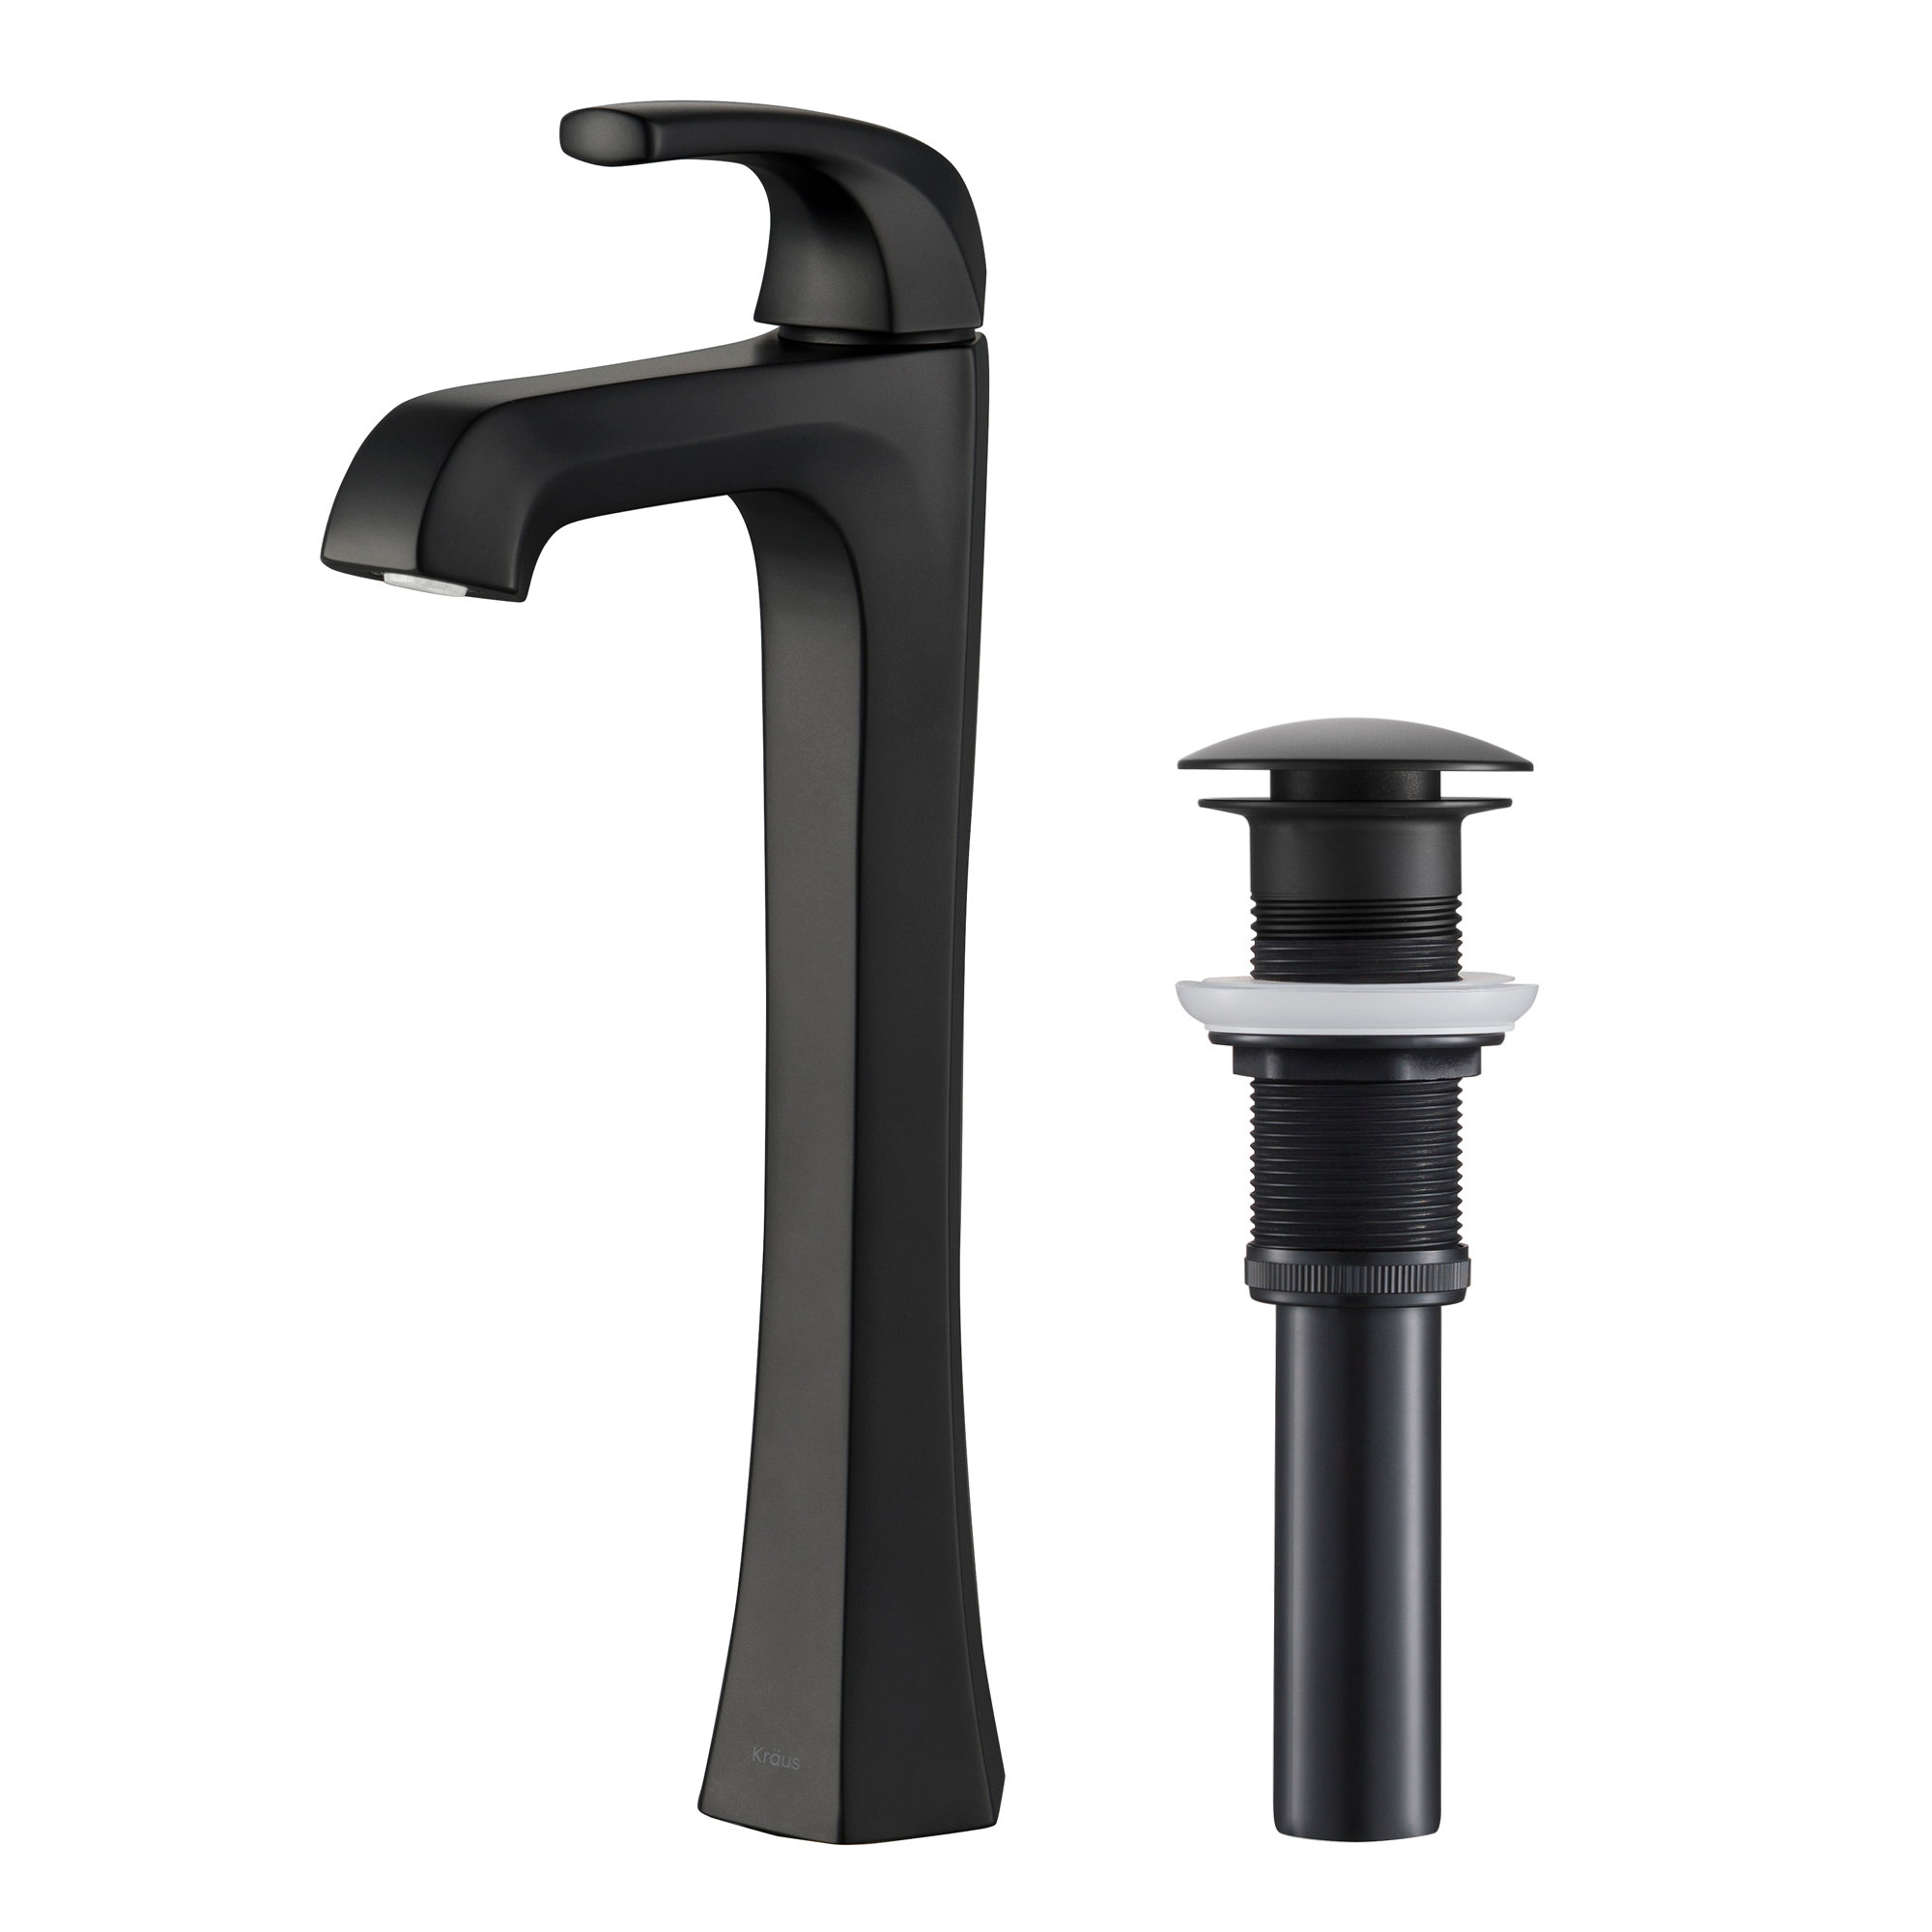 Kraus Kvf-1210gm Esta Single Handle Vessel Bathroom Faucet With Pop-up Drain - Gunmetal